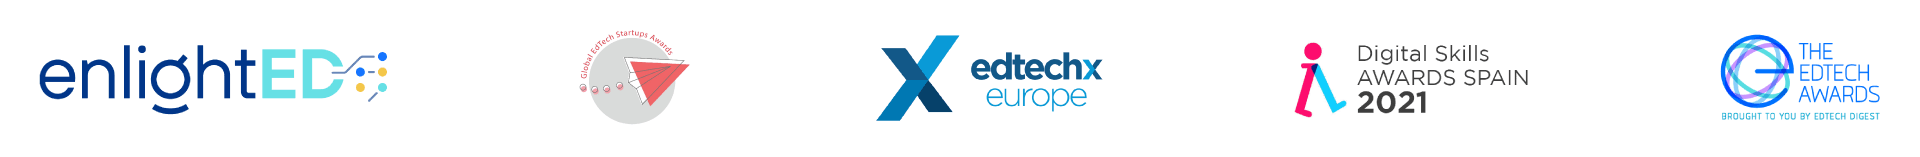 logos from education prizes: enlightED, global EdTech Startup Awards, edtechx europe, digital skills awards spain 2021 and the edtech awards